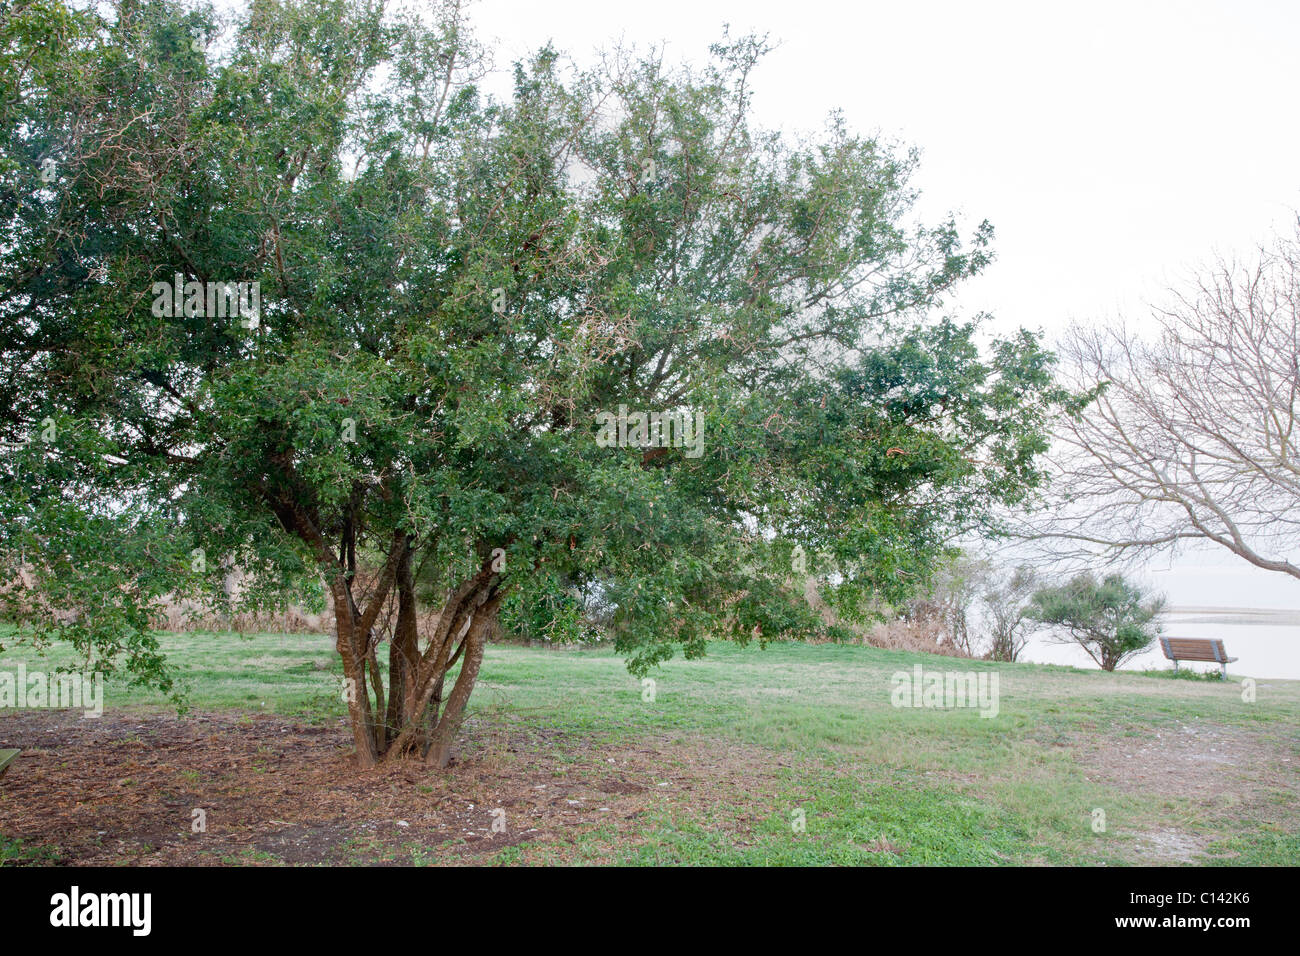 Texas ebano tree, parco impostazione, Foto Stock